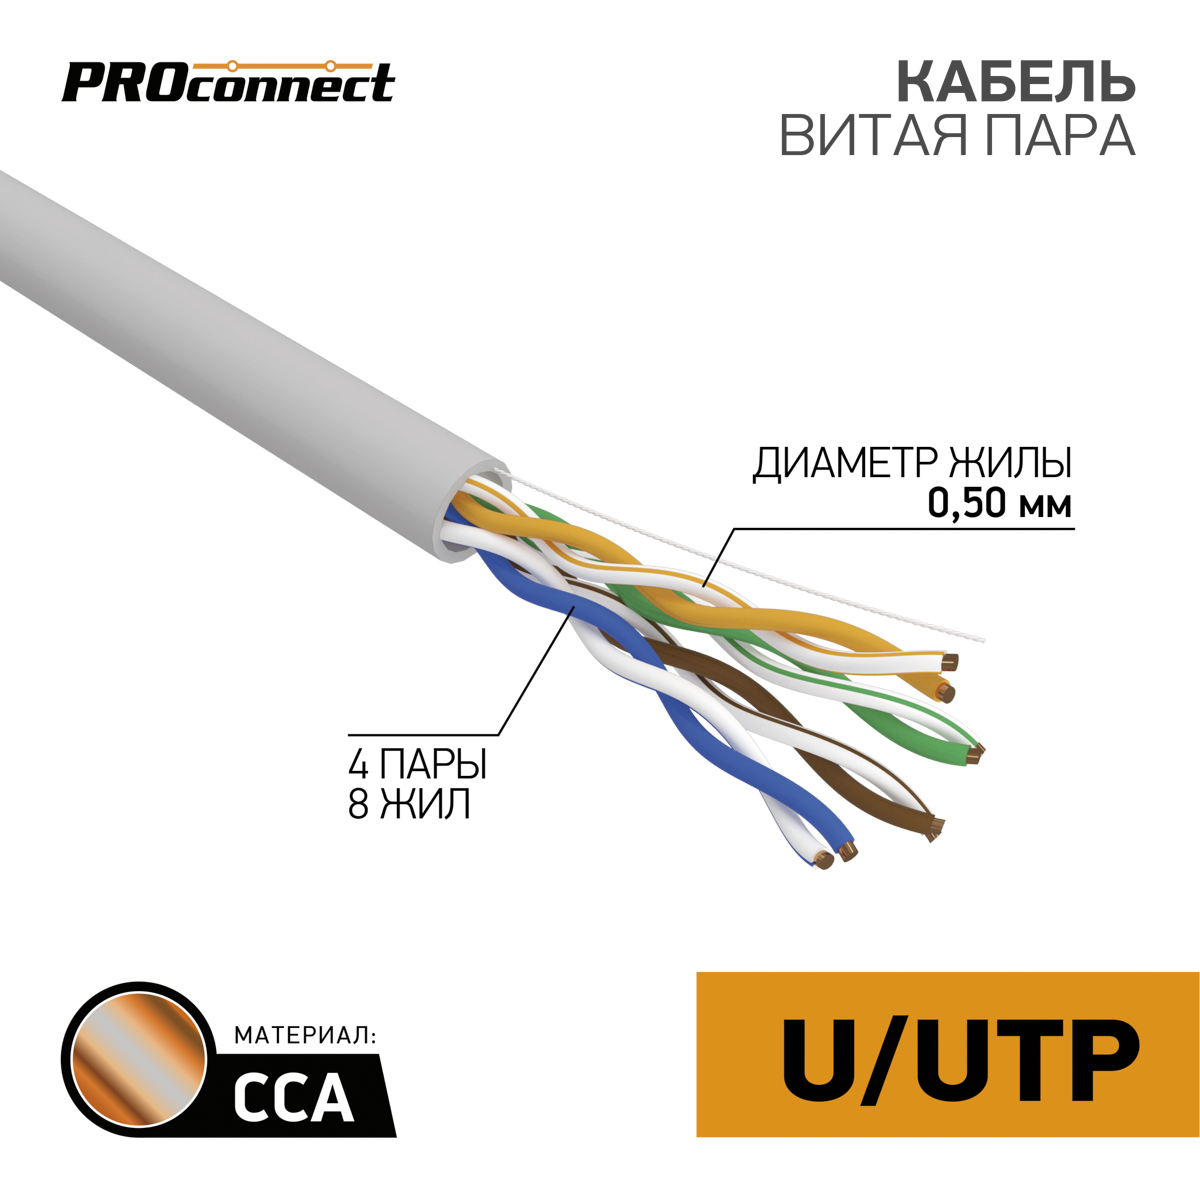 Кабель UTP 4 х 2 х 0,50 мм, CCA, cat 5e, PVC серый, 1 метр  PROCONNECT 